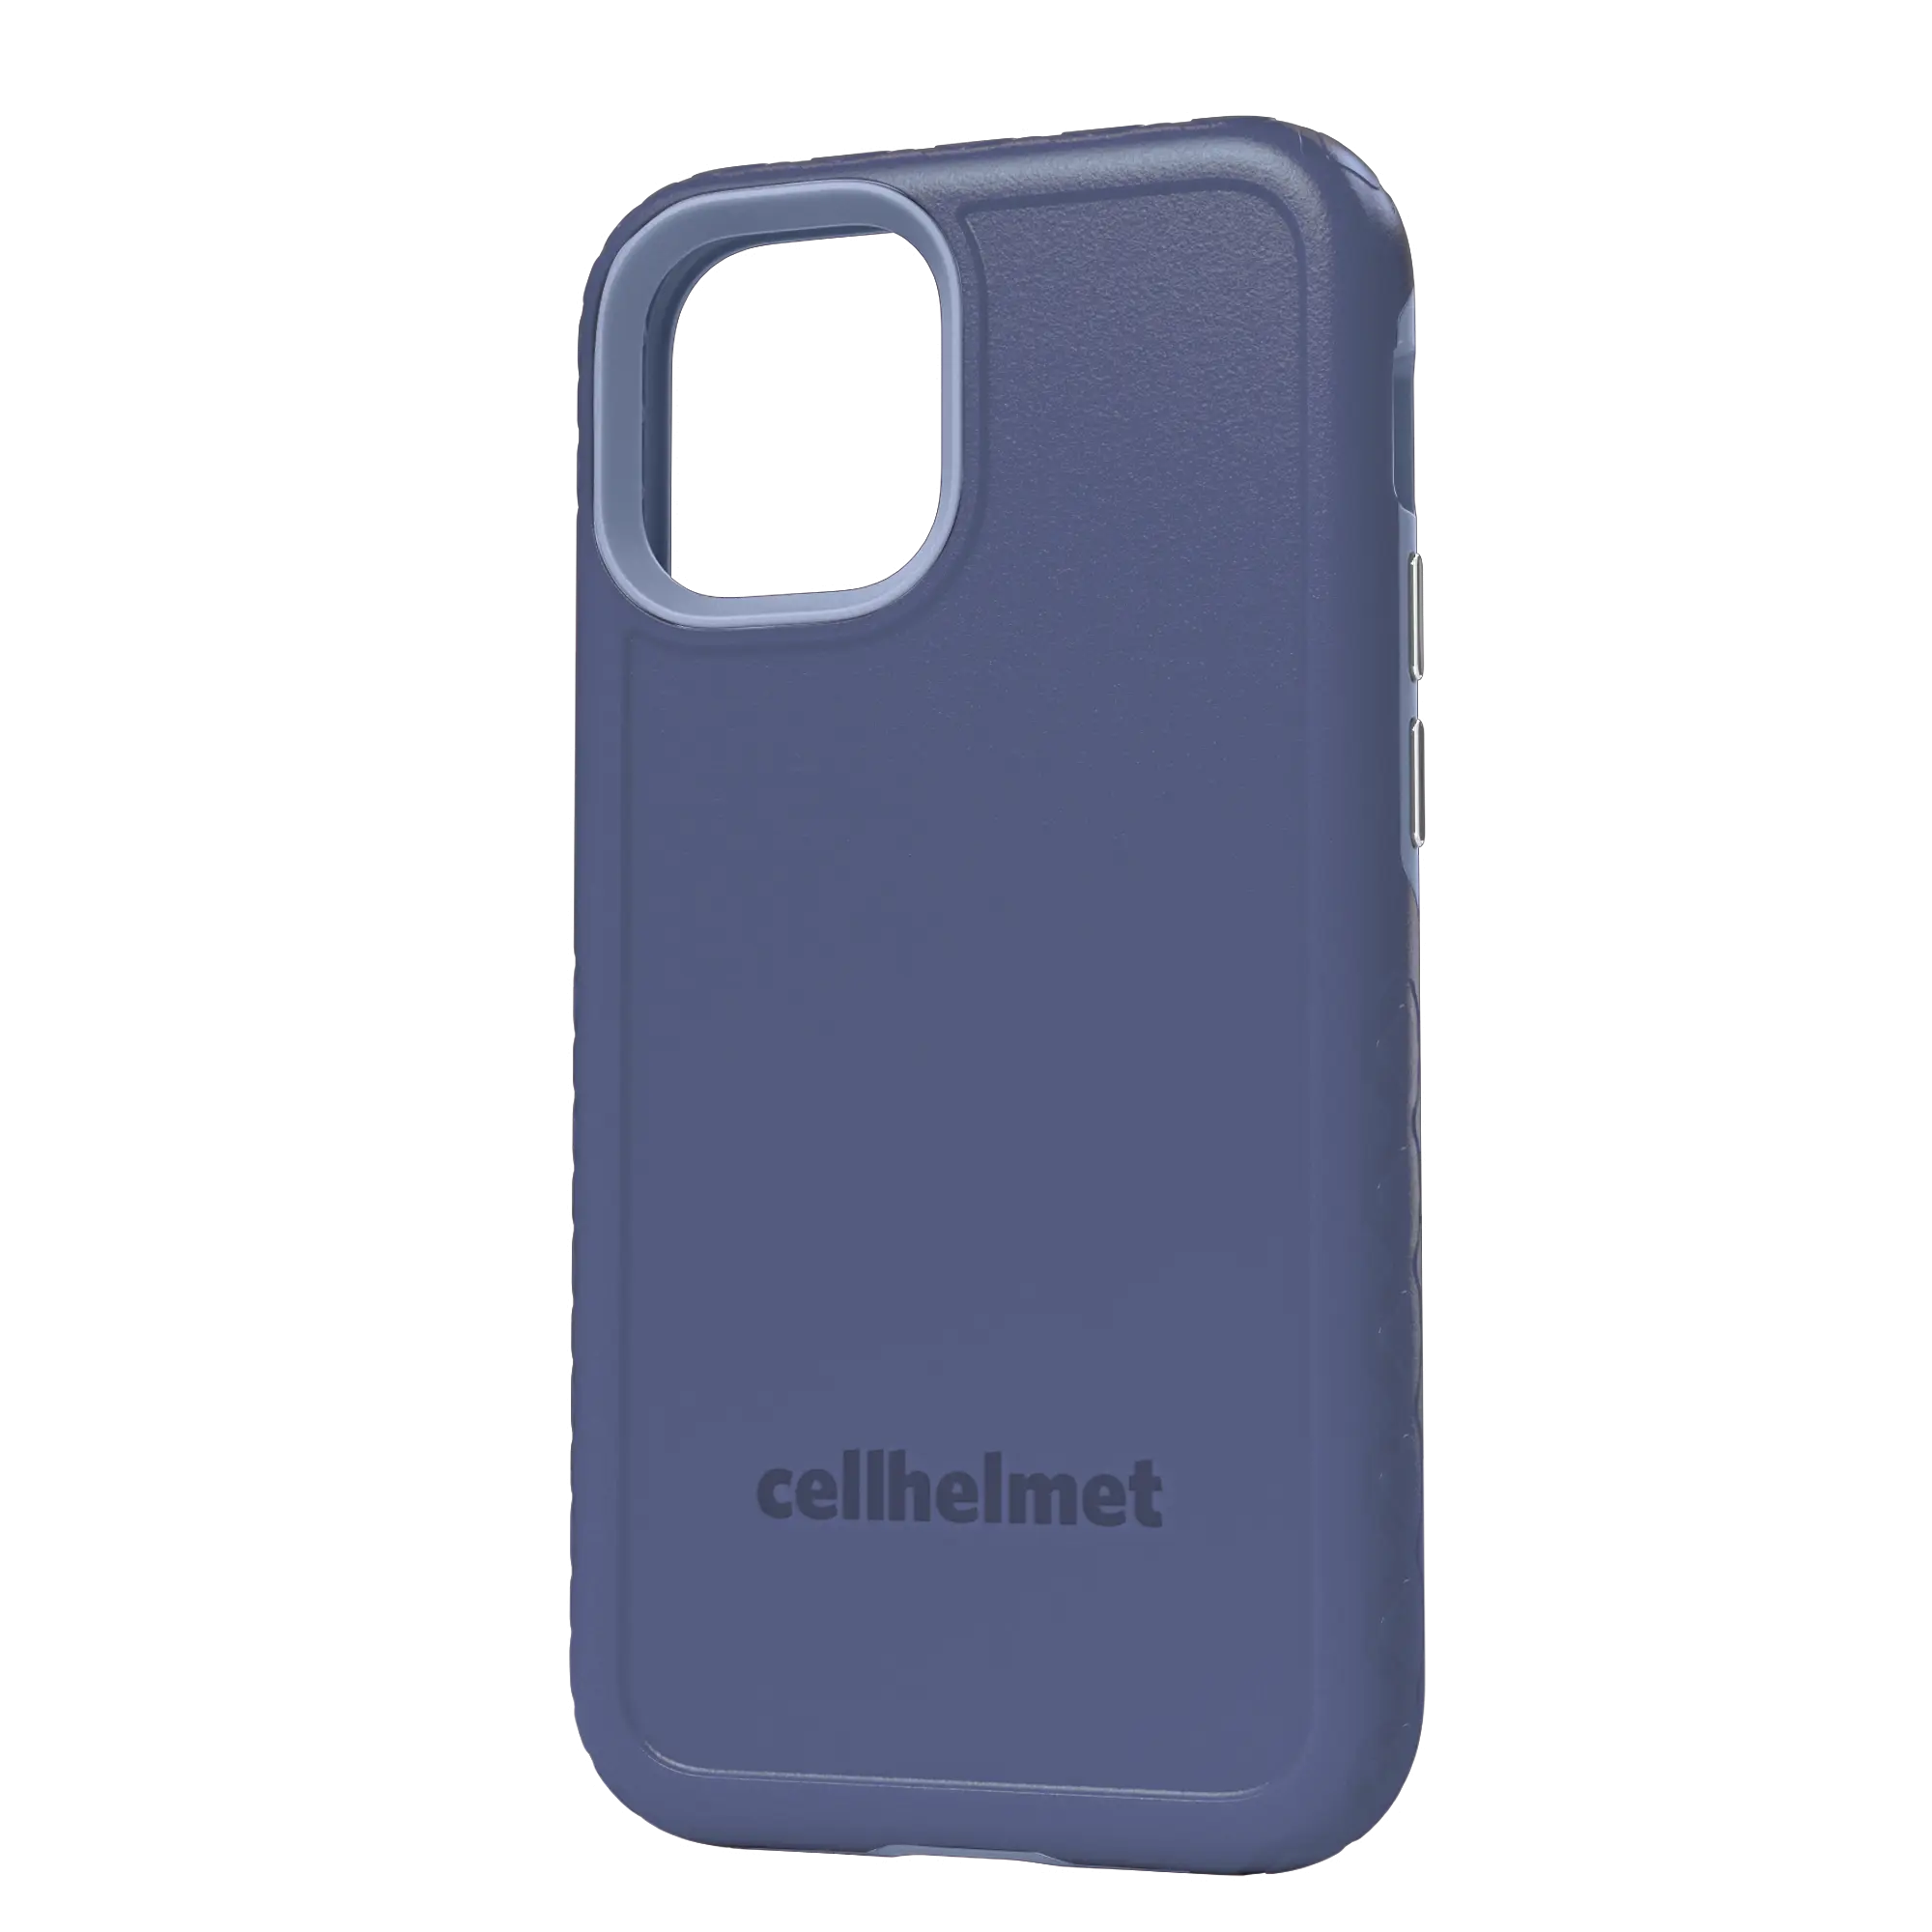 Blue cellhelmet Personalized Case for iPhone 12 Mini